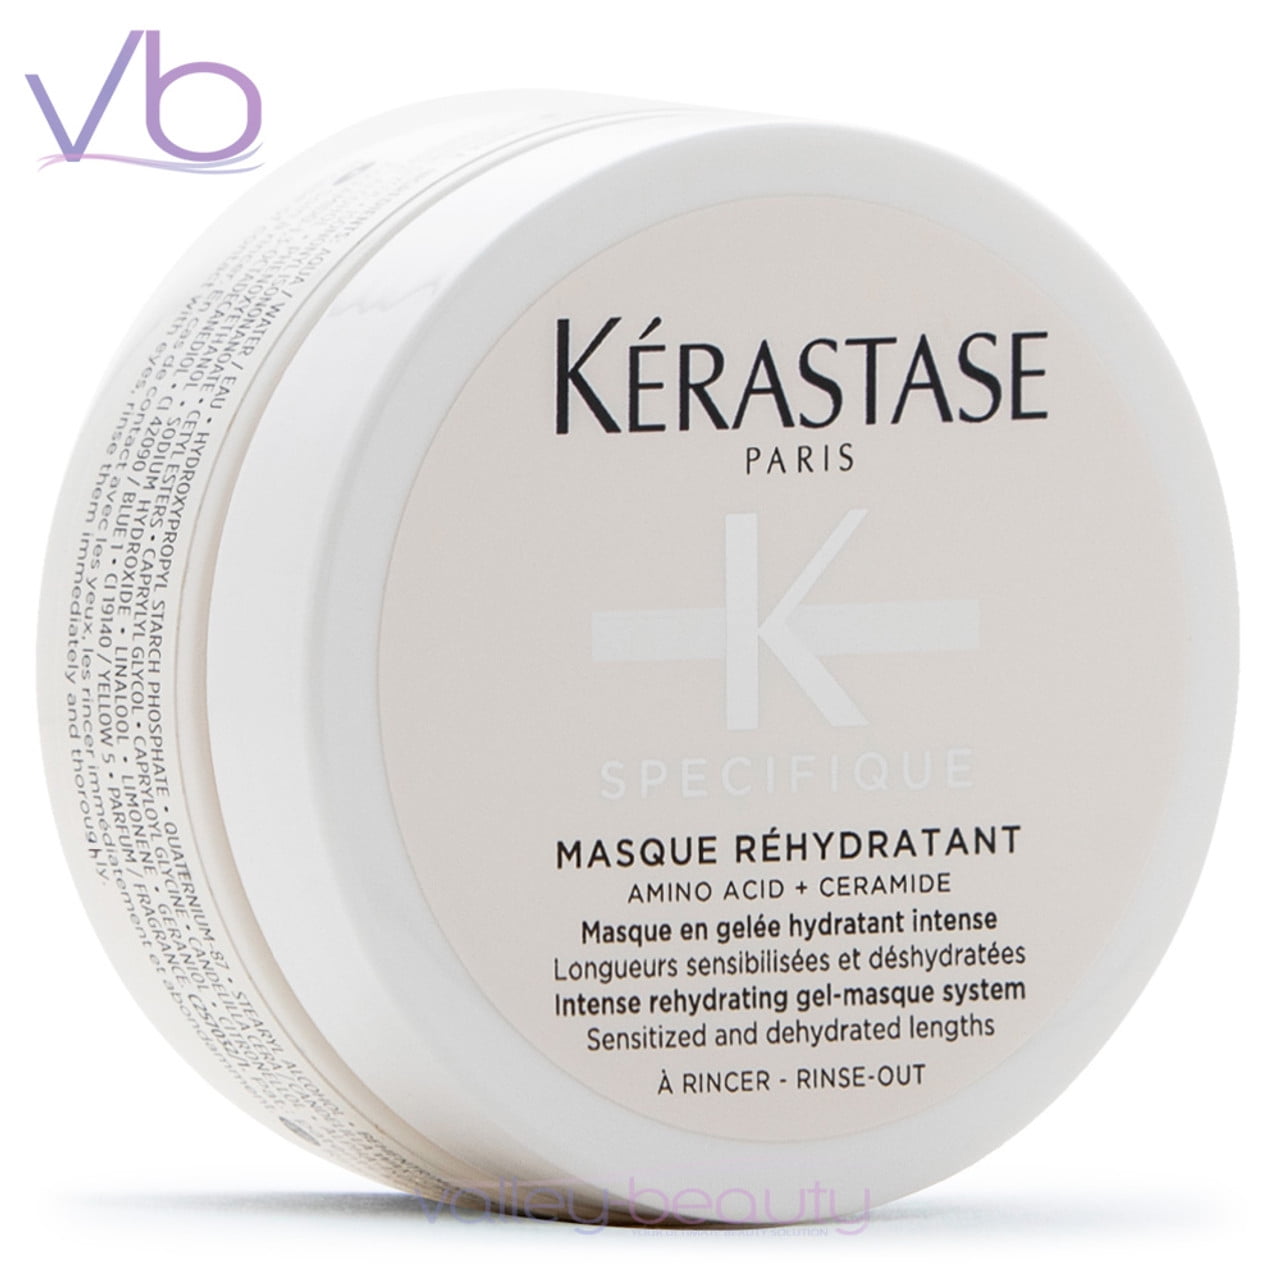 Kerastase Specifique Masque Rehydratant Hair Gel Mask Size 2.55 fl OZ - Walmart.com